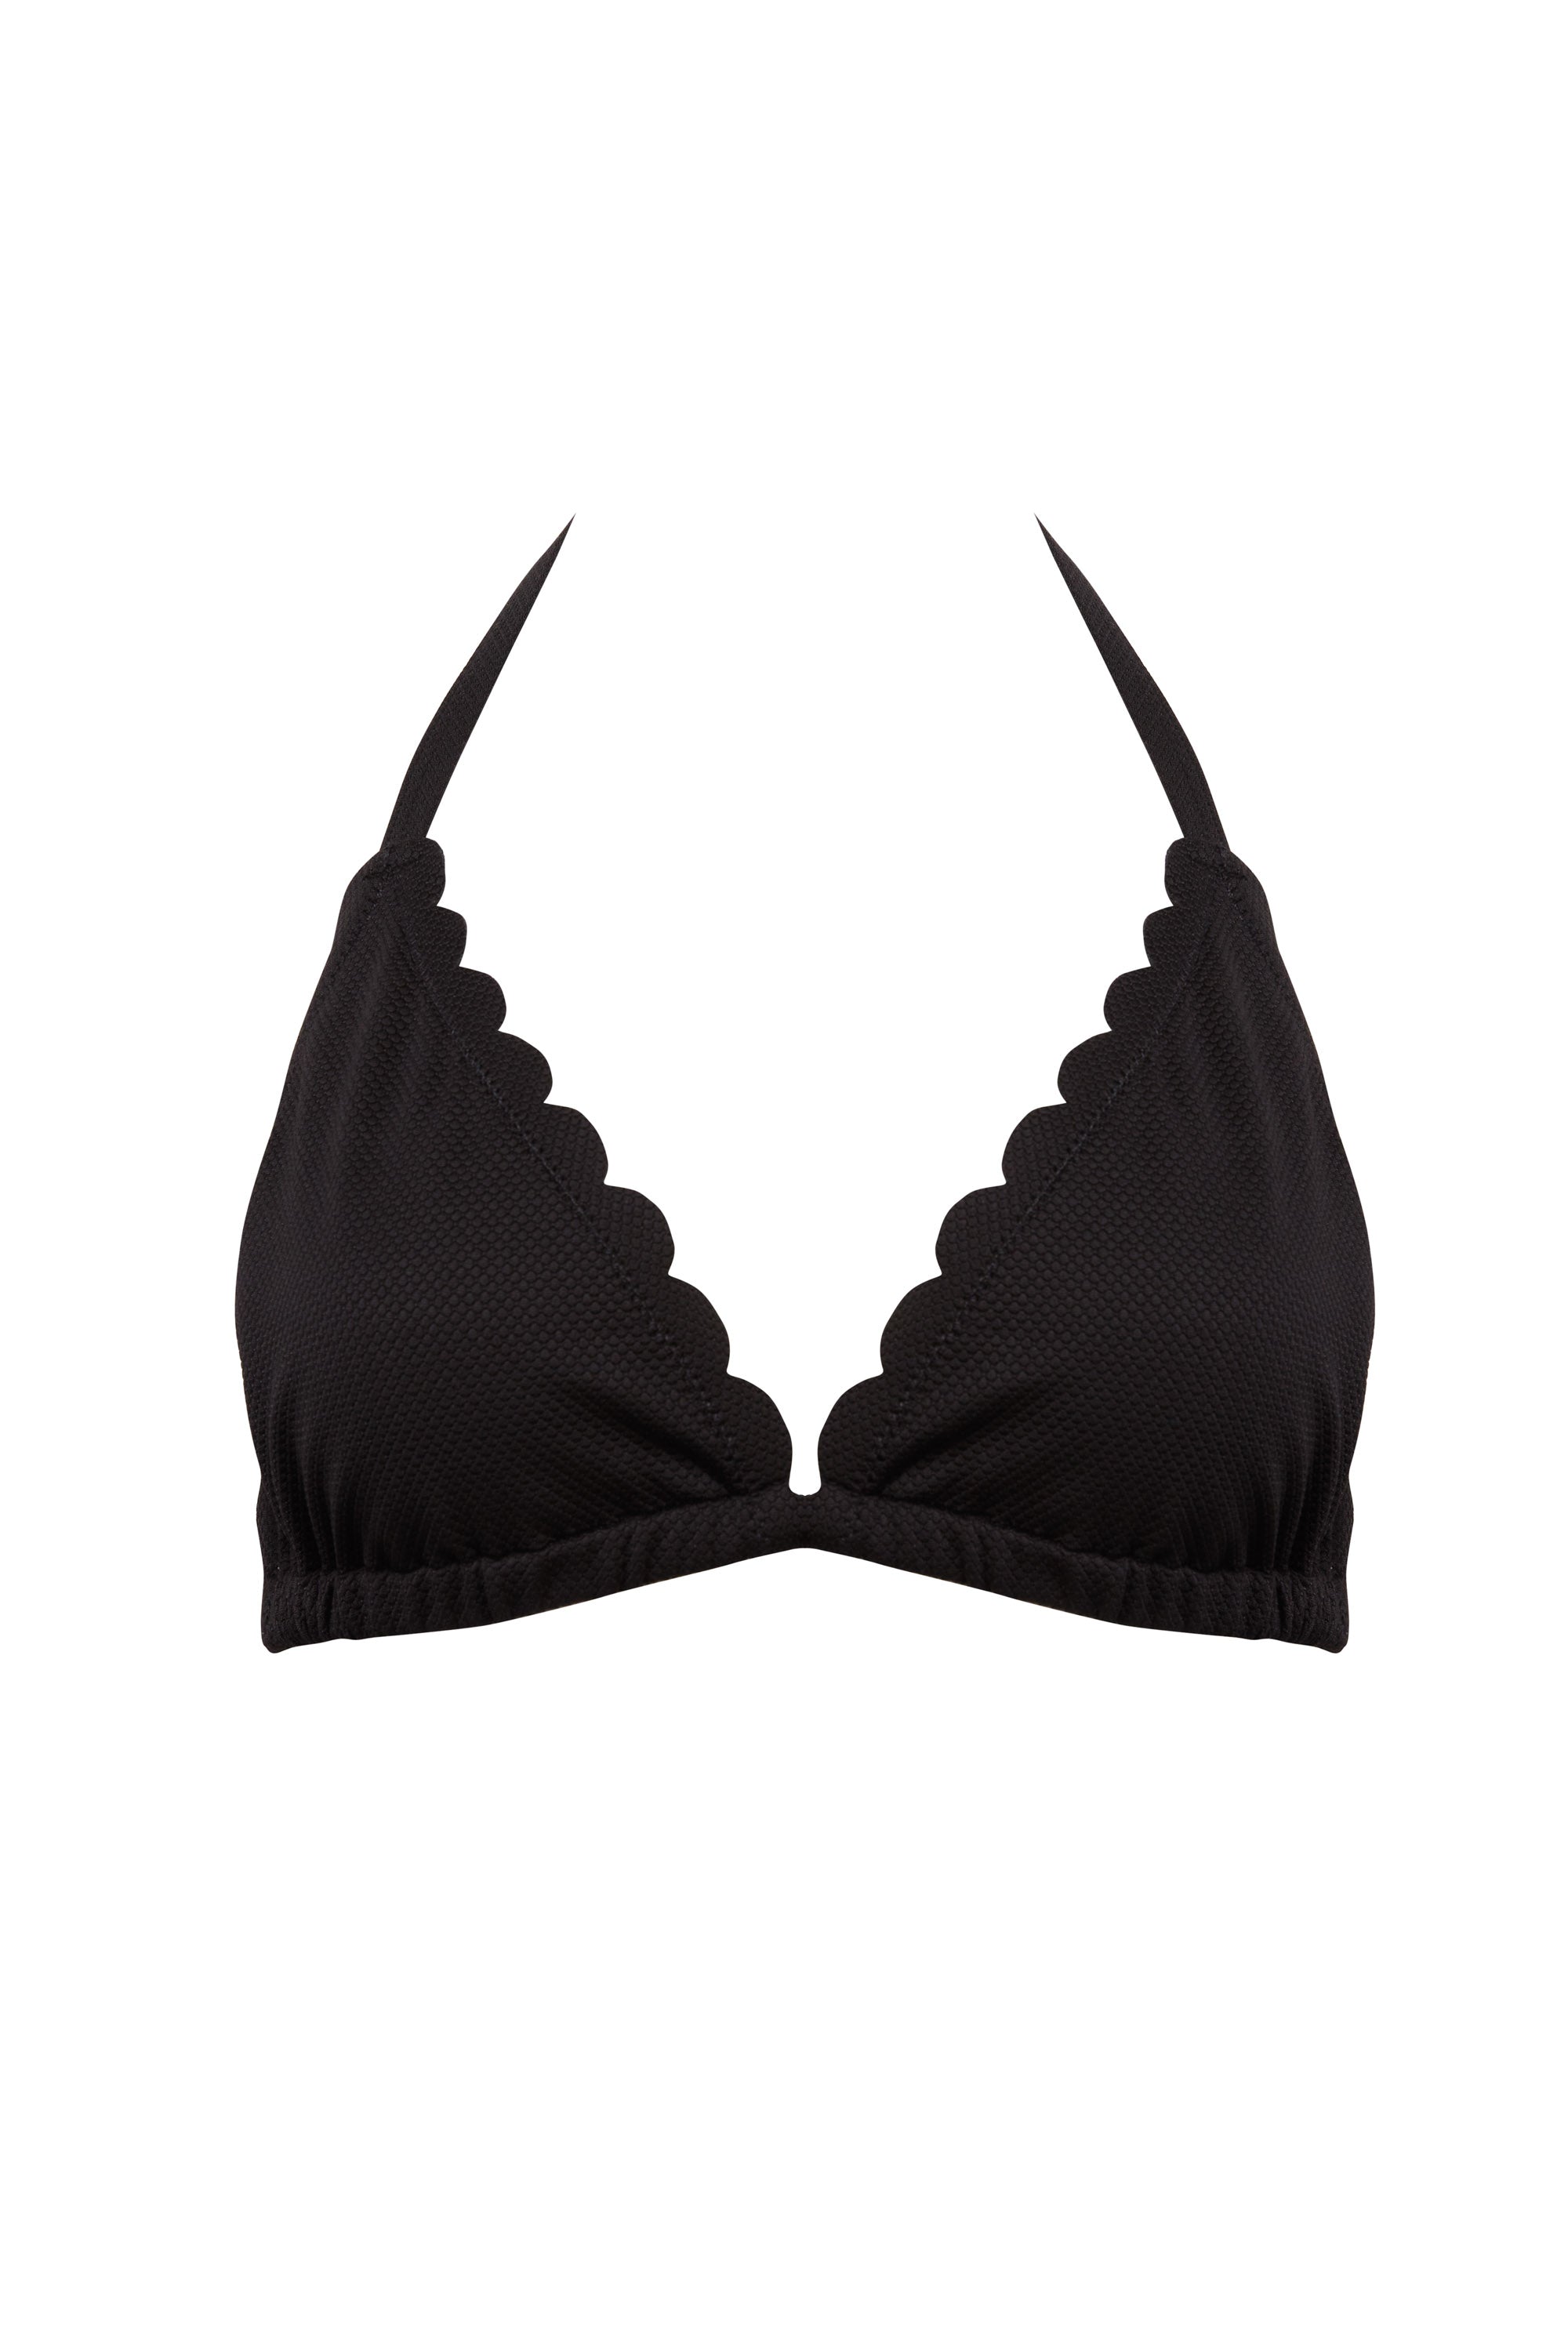 Textured black scalloped halter tie triangle bikini top